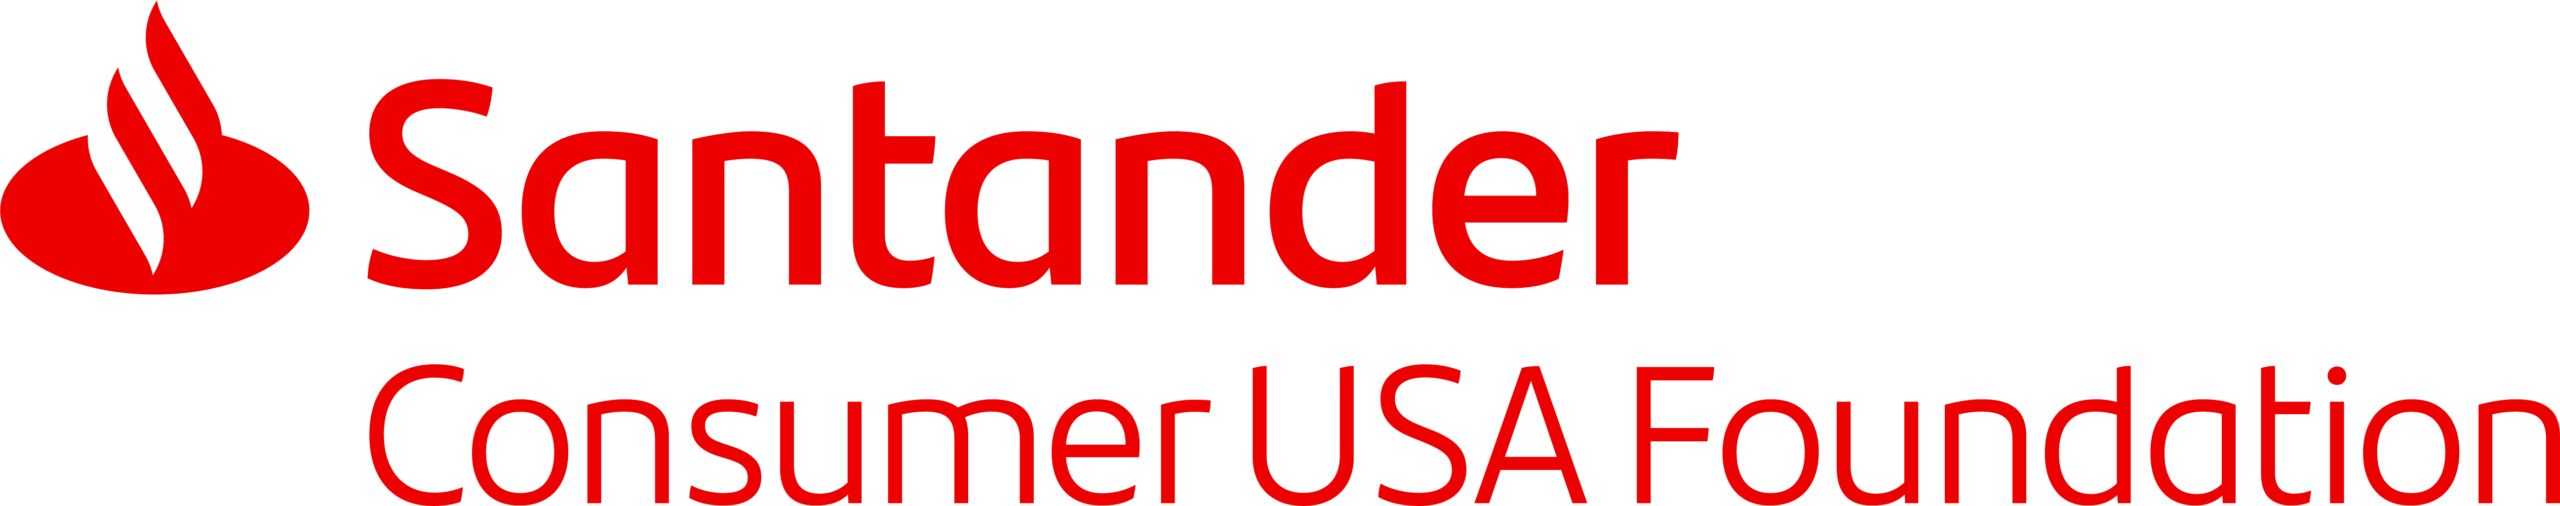 SANTANDER CON USA FOUNDATION CV POS RGB